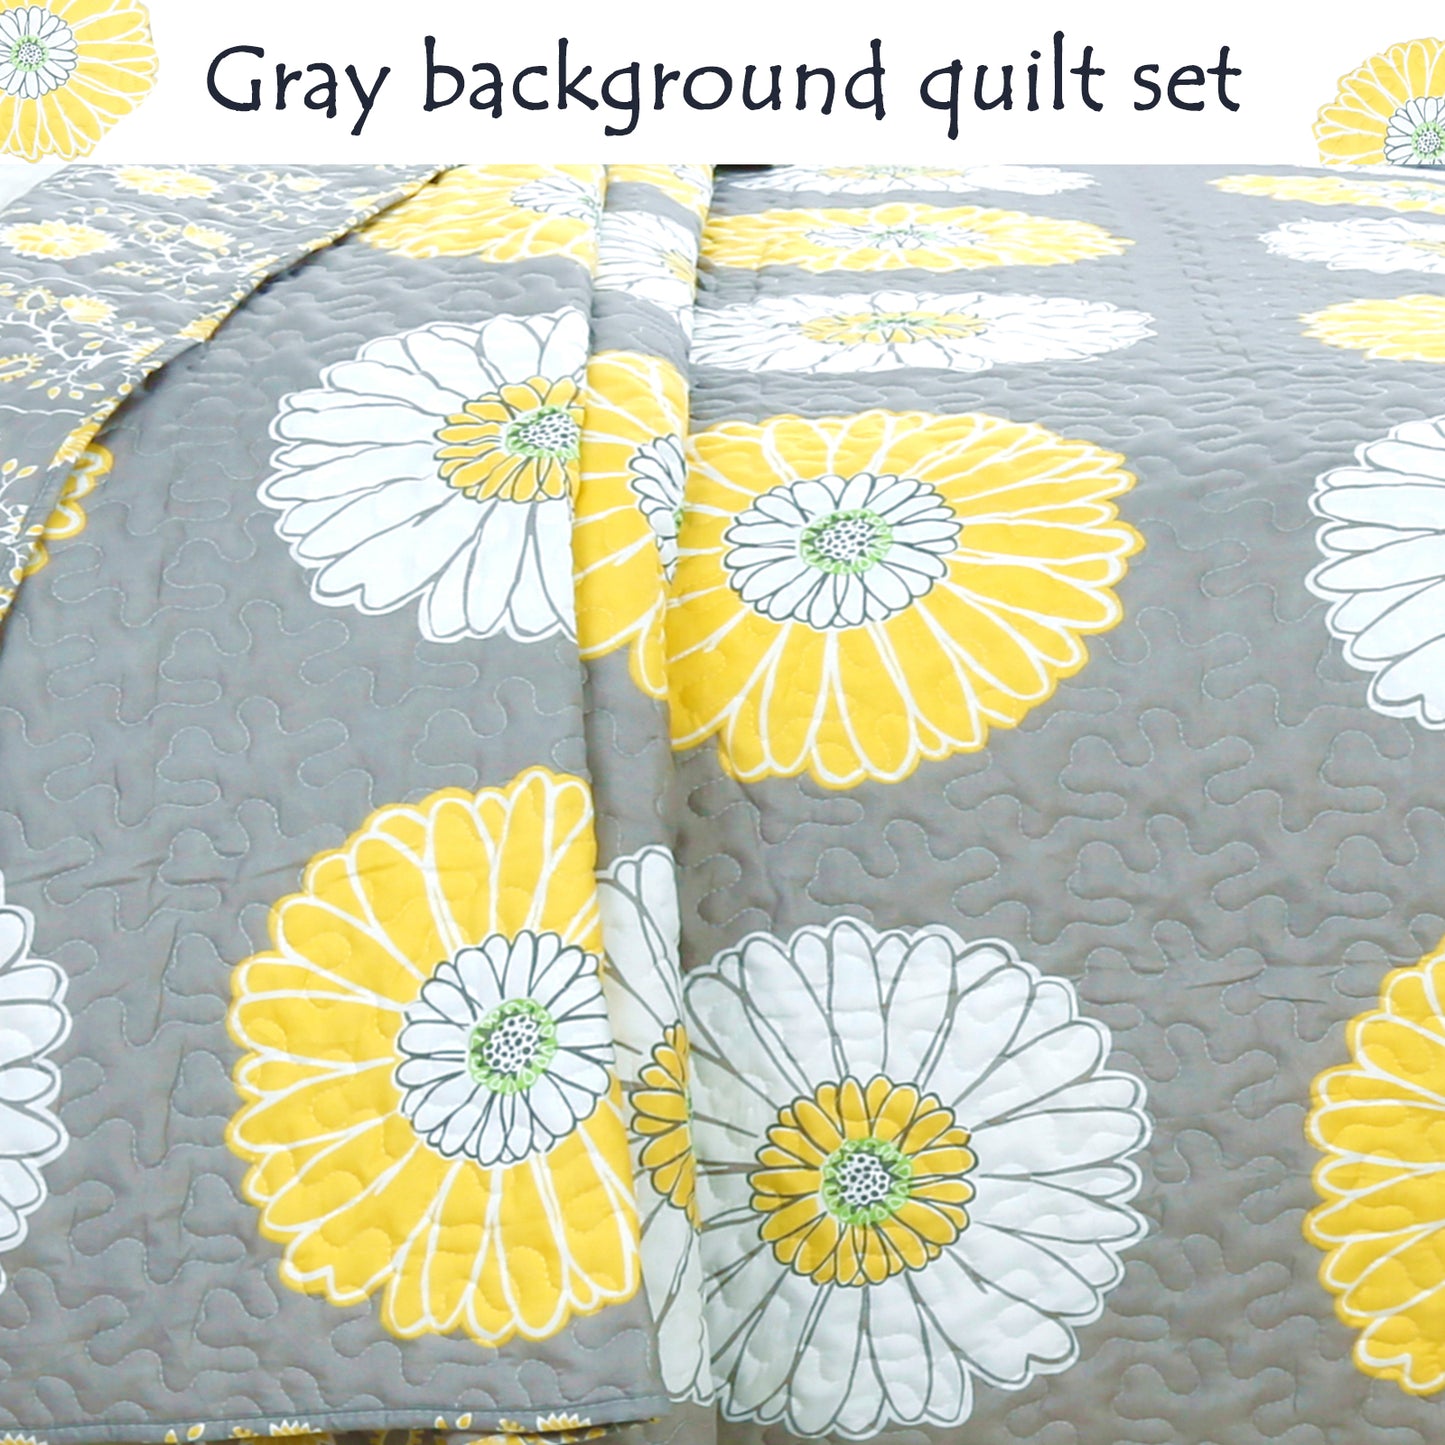 Anya Floral Print Yellow Grey Reversible Quilt Bedding Set